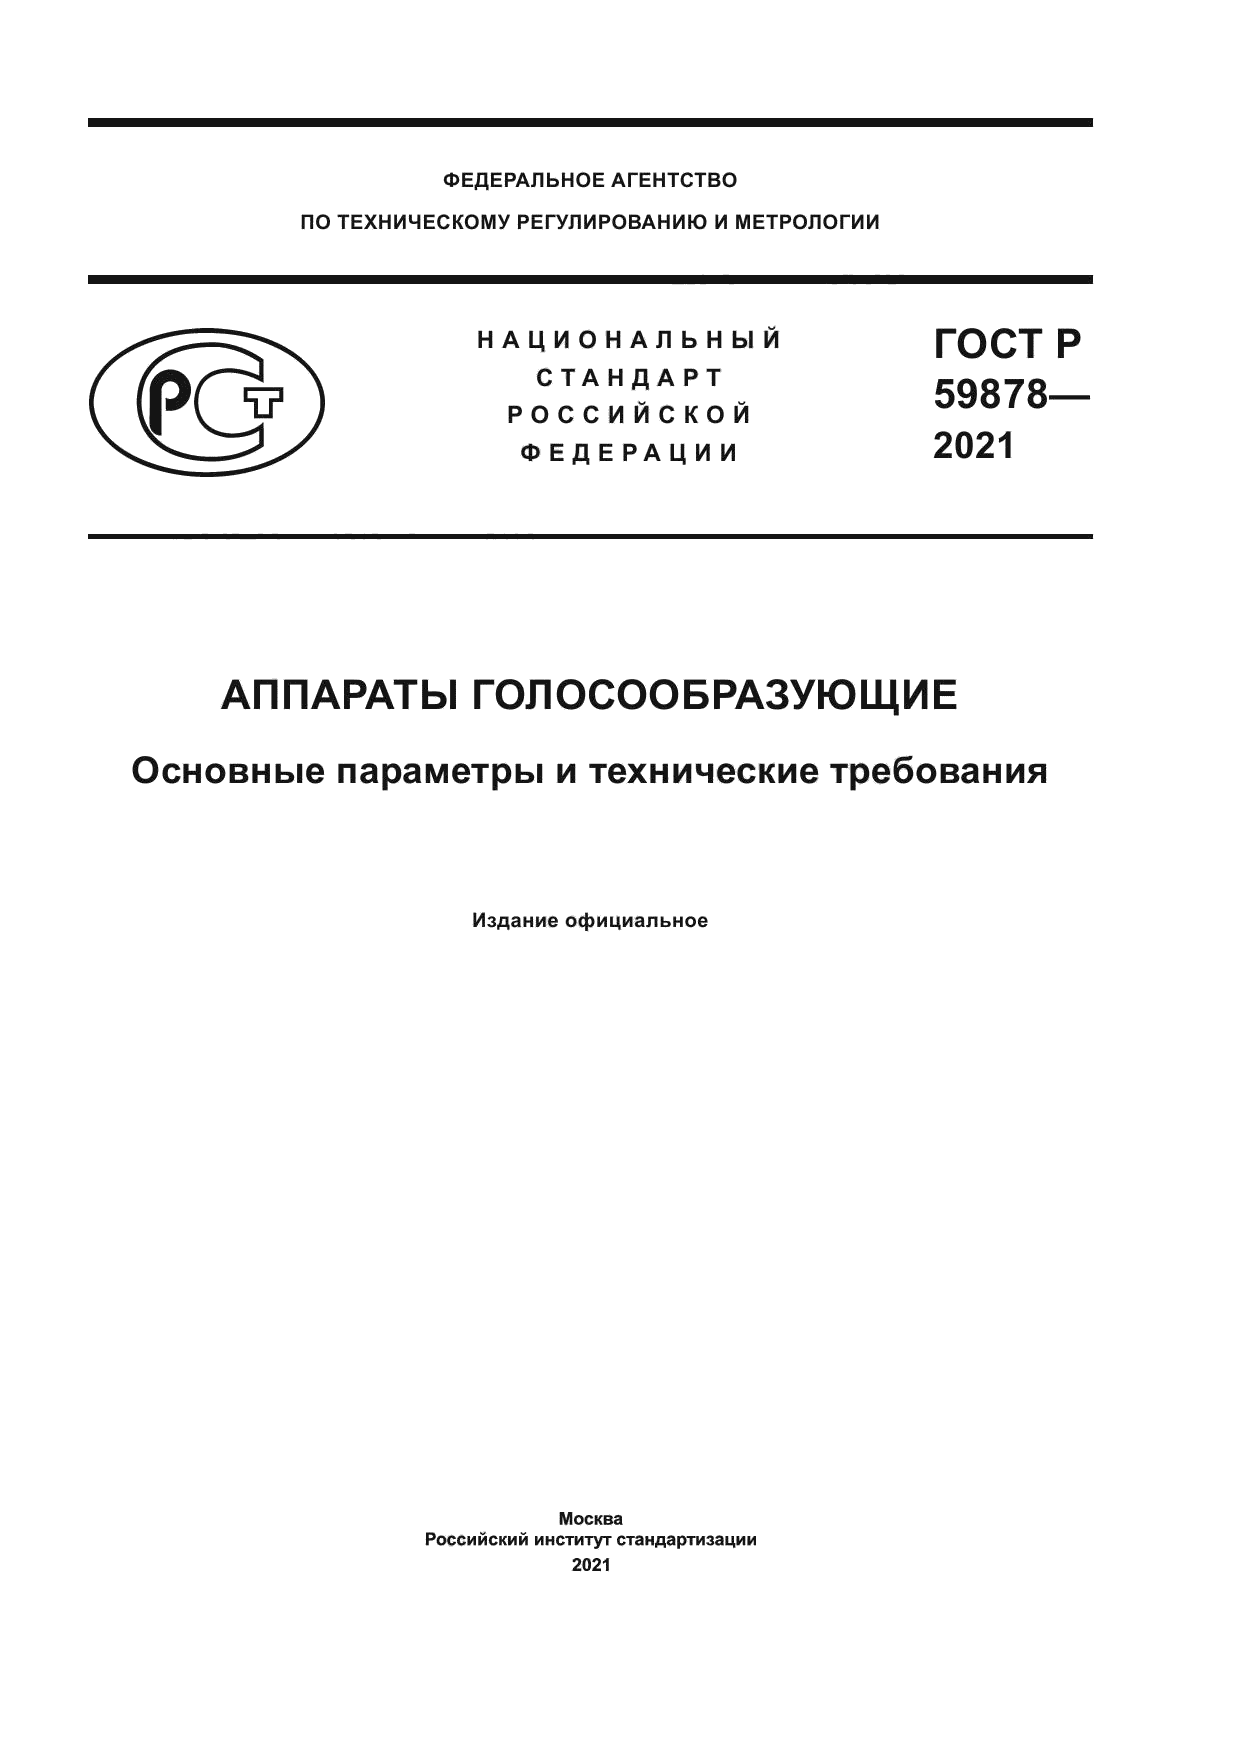 ГОСТ Р 59878-2021